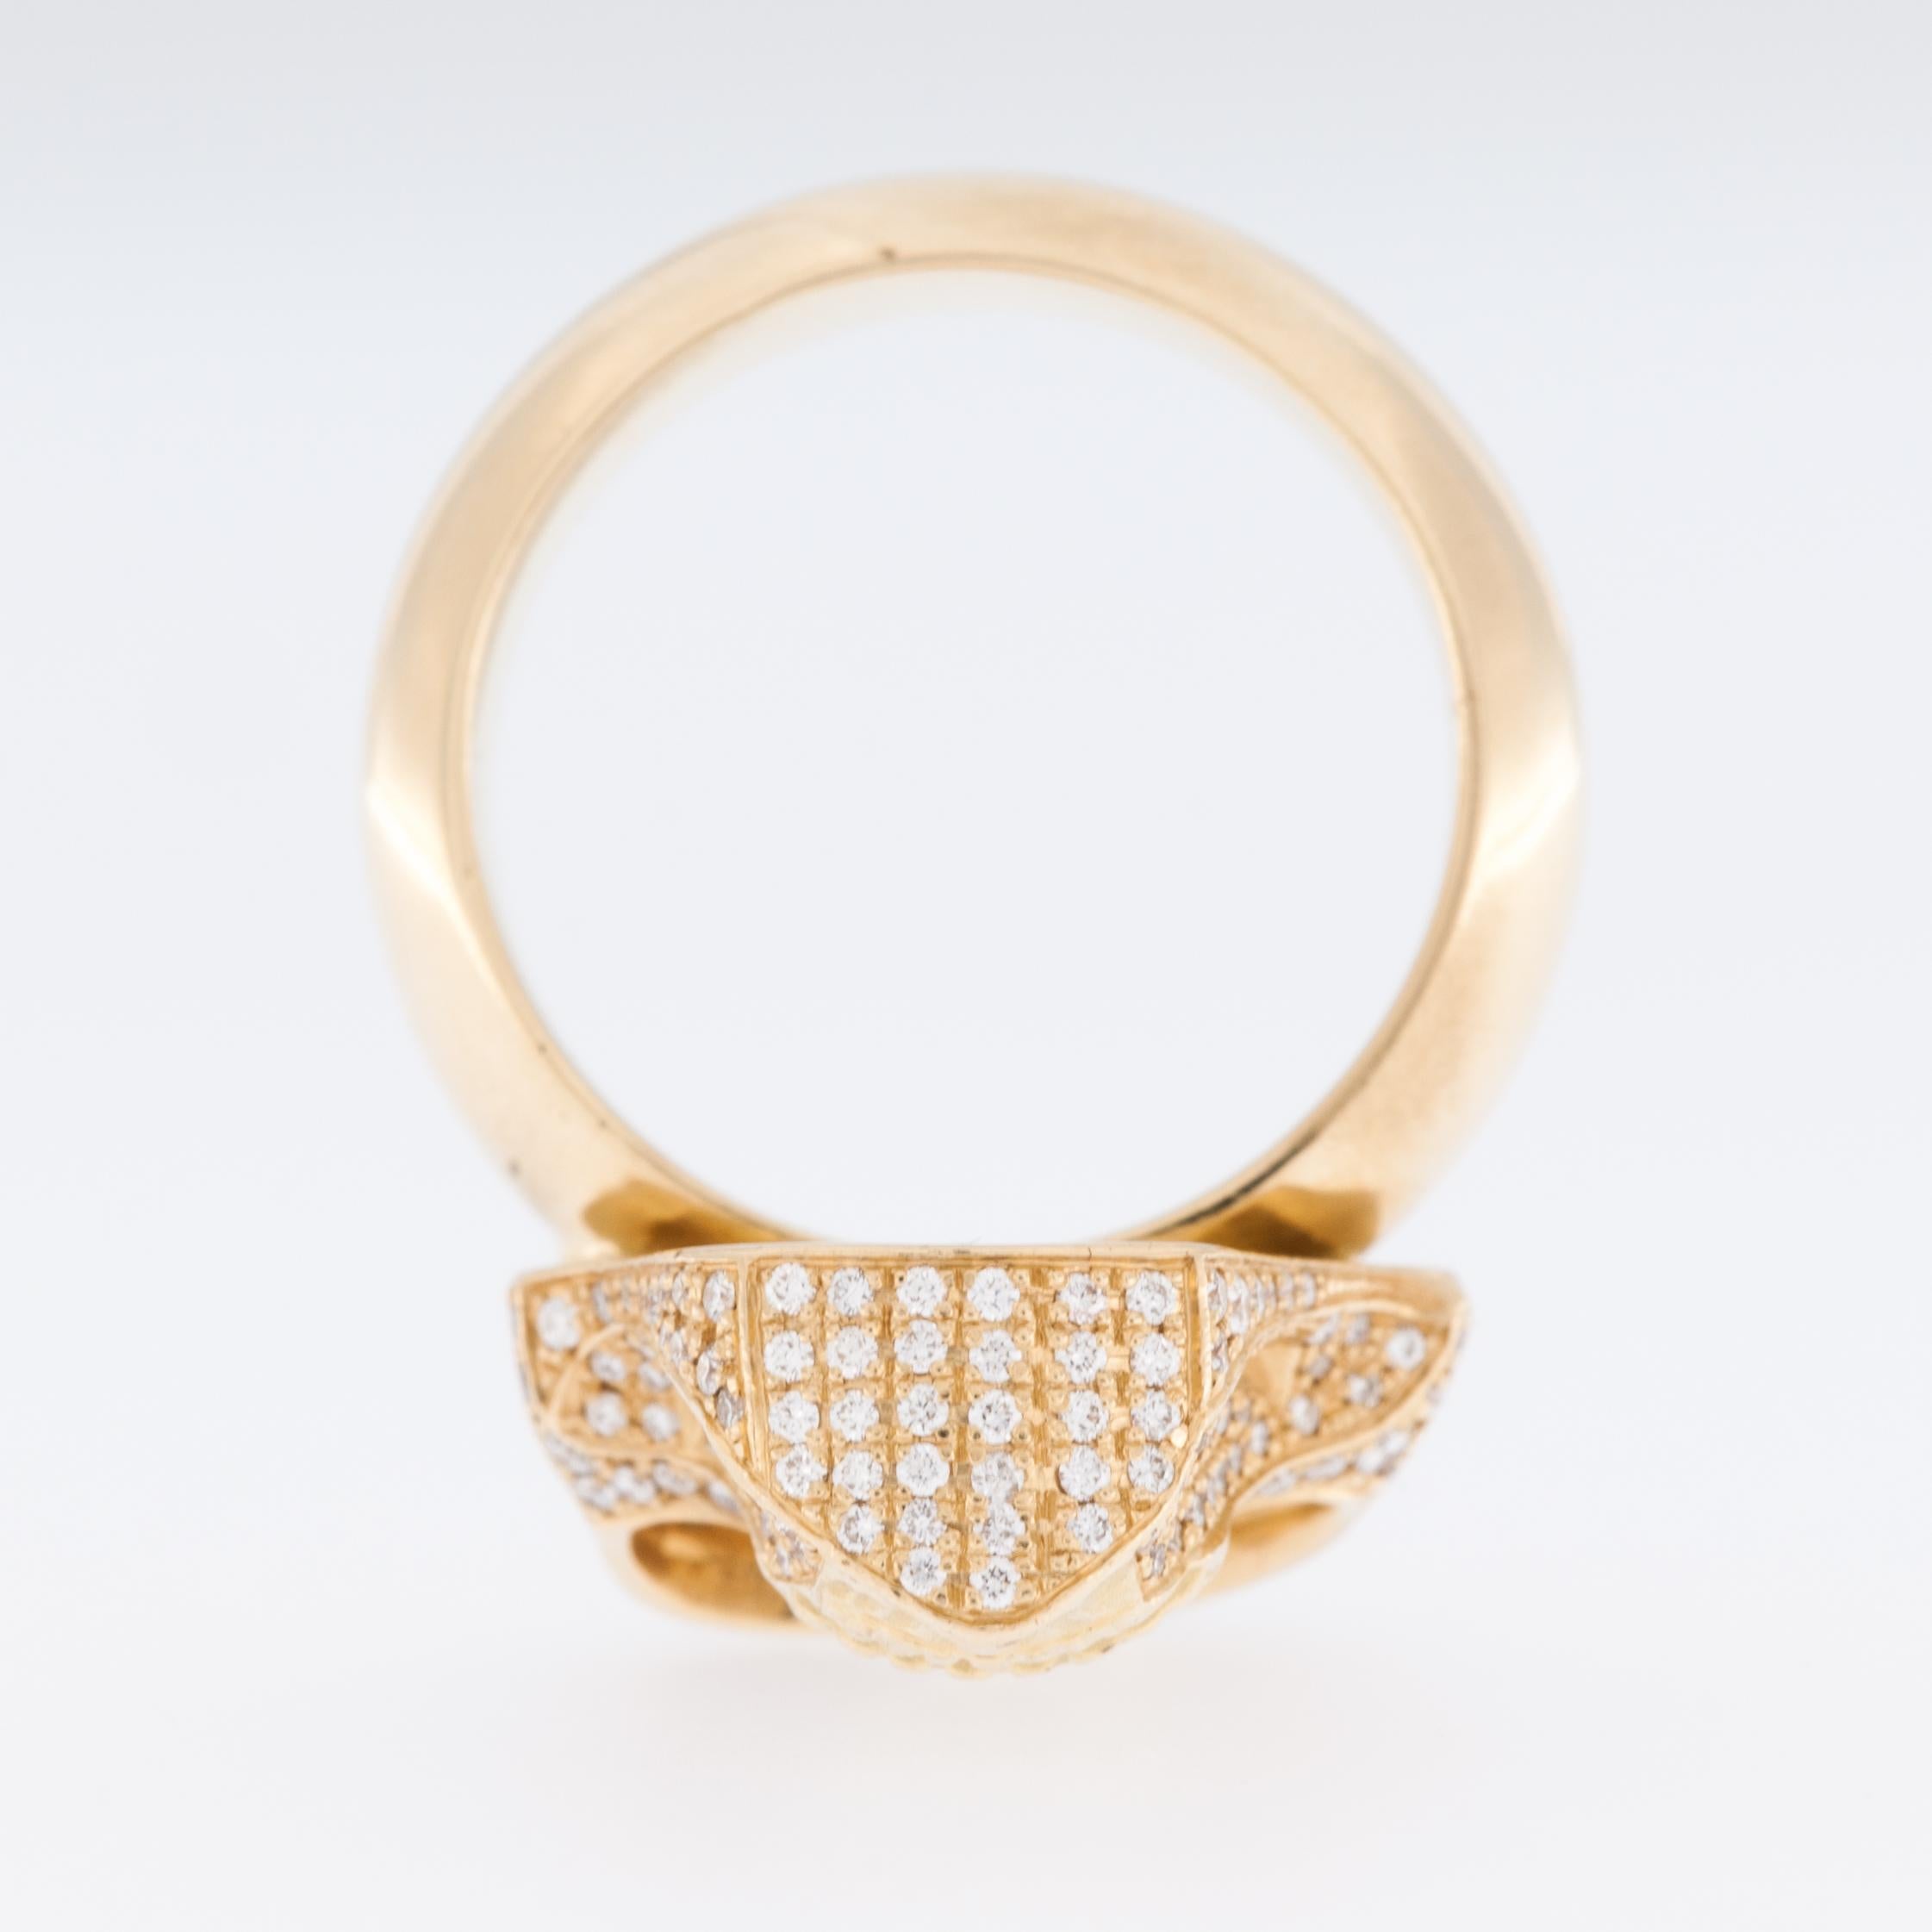 Brilliant Cut Skull Design 18 karat Yellow Gold Ring with Diamonds For Sale